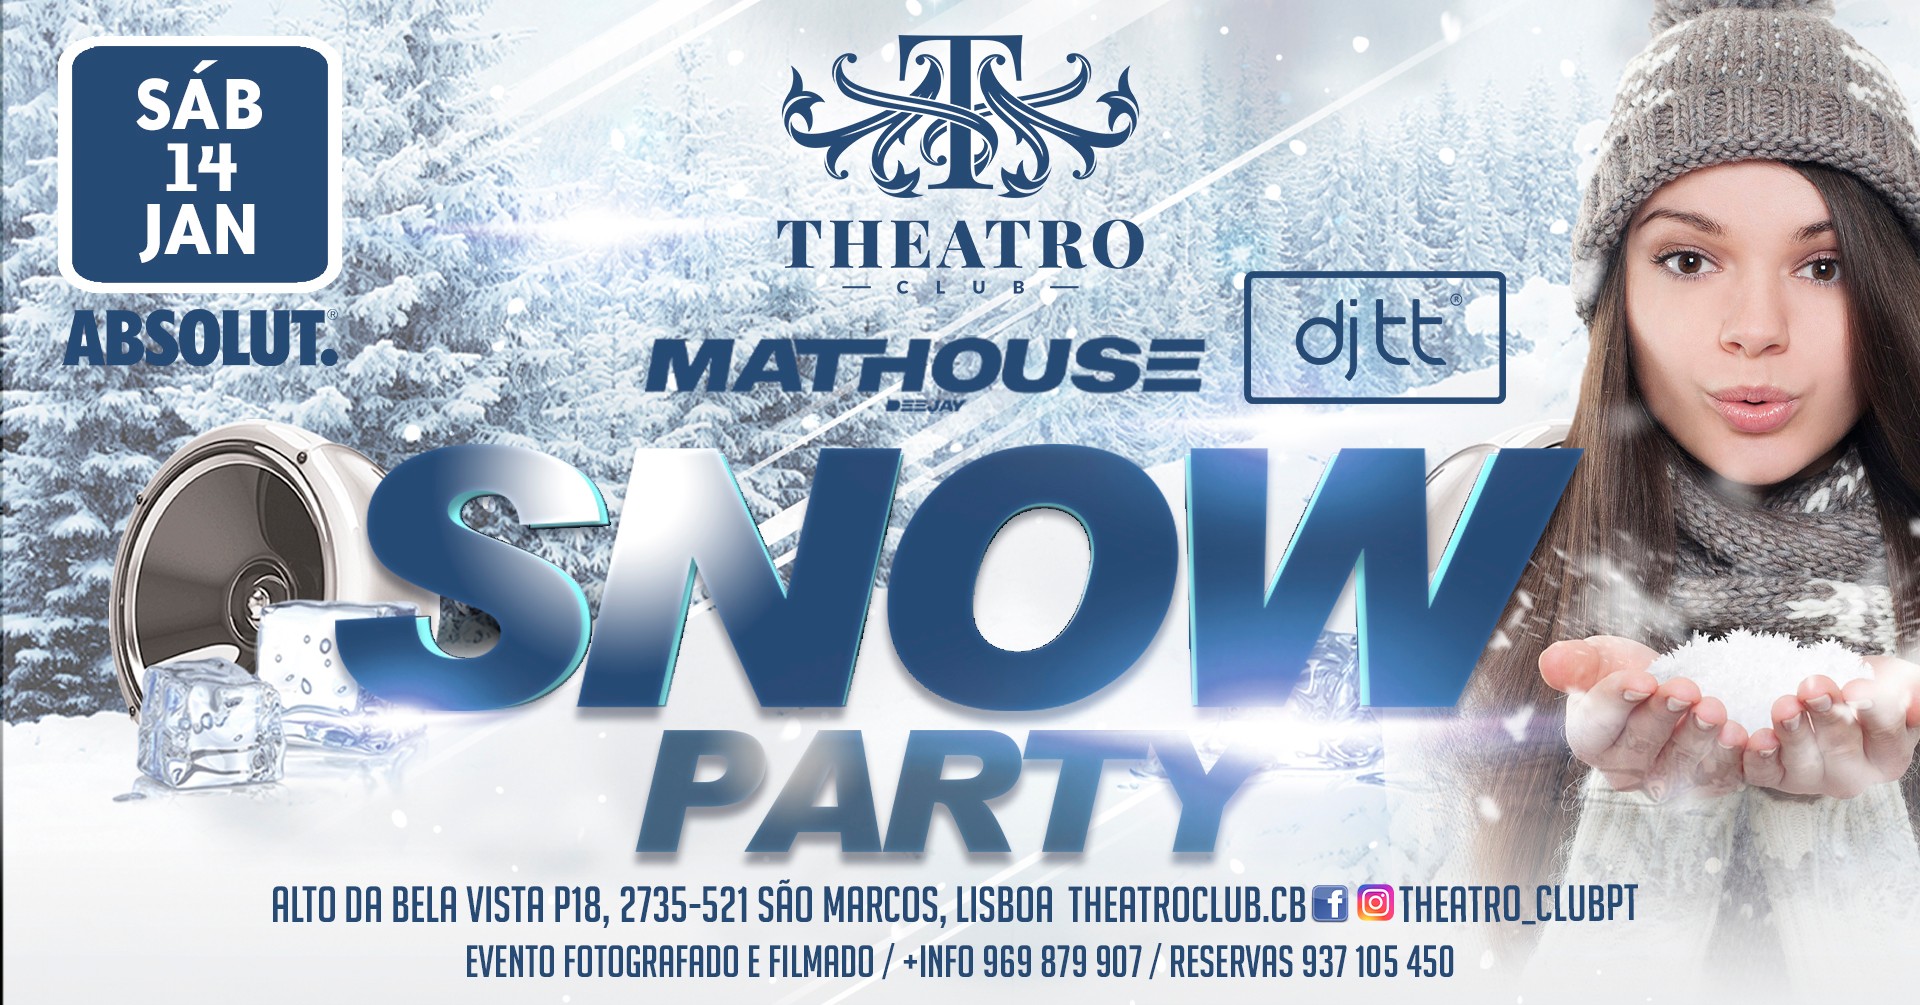 Snow Party * Dj TT & Dj Mathouse